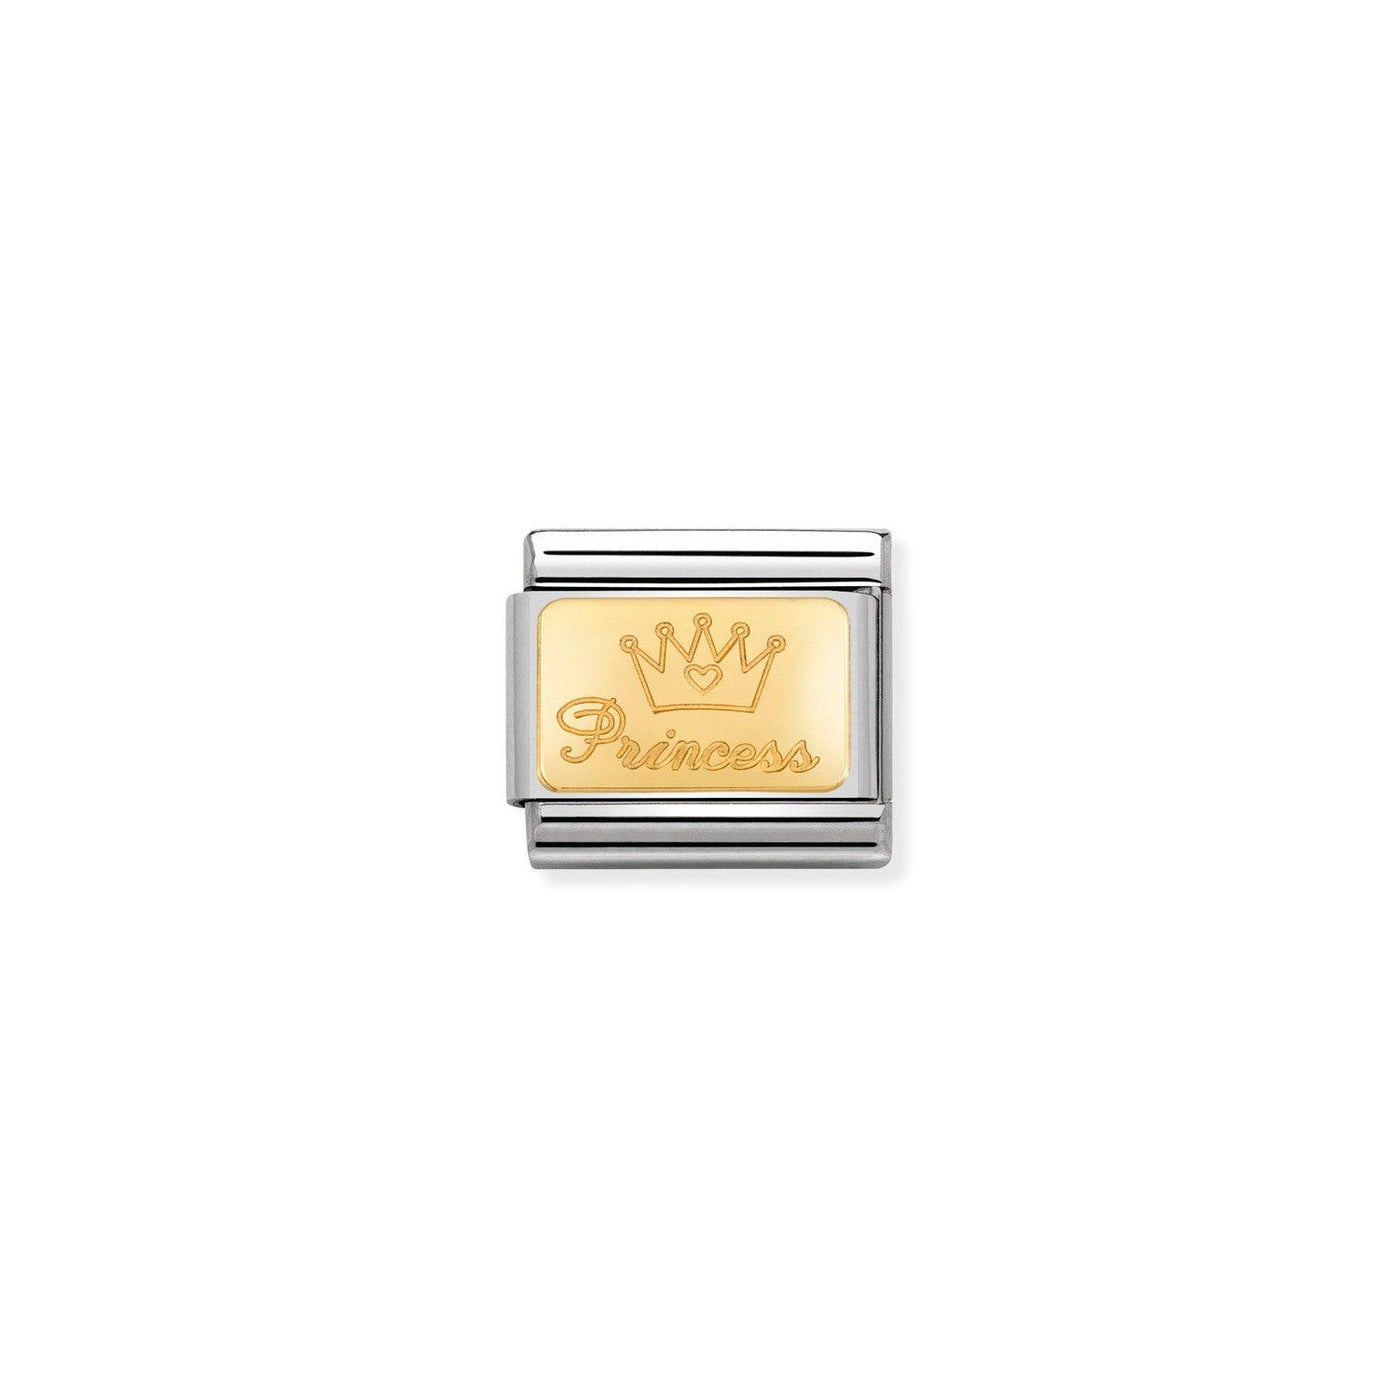 Nomination Classic Gold Plate Princess Charm - Rococo Jewellery